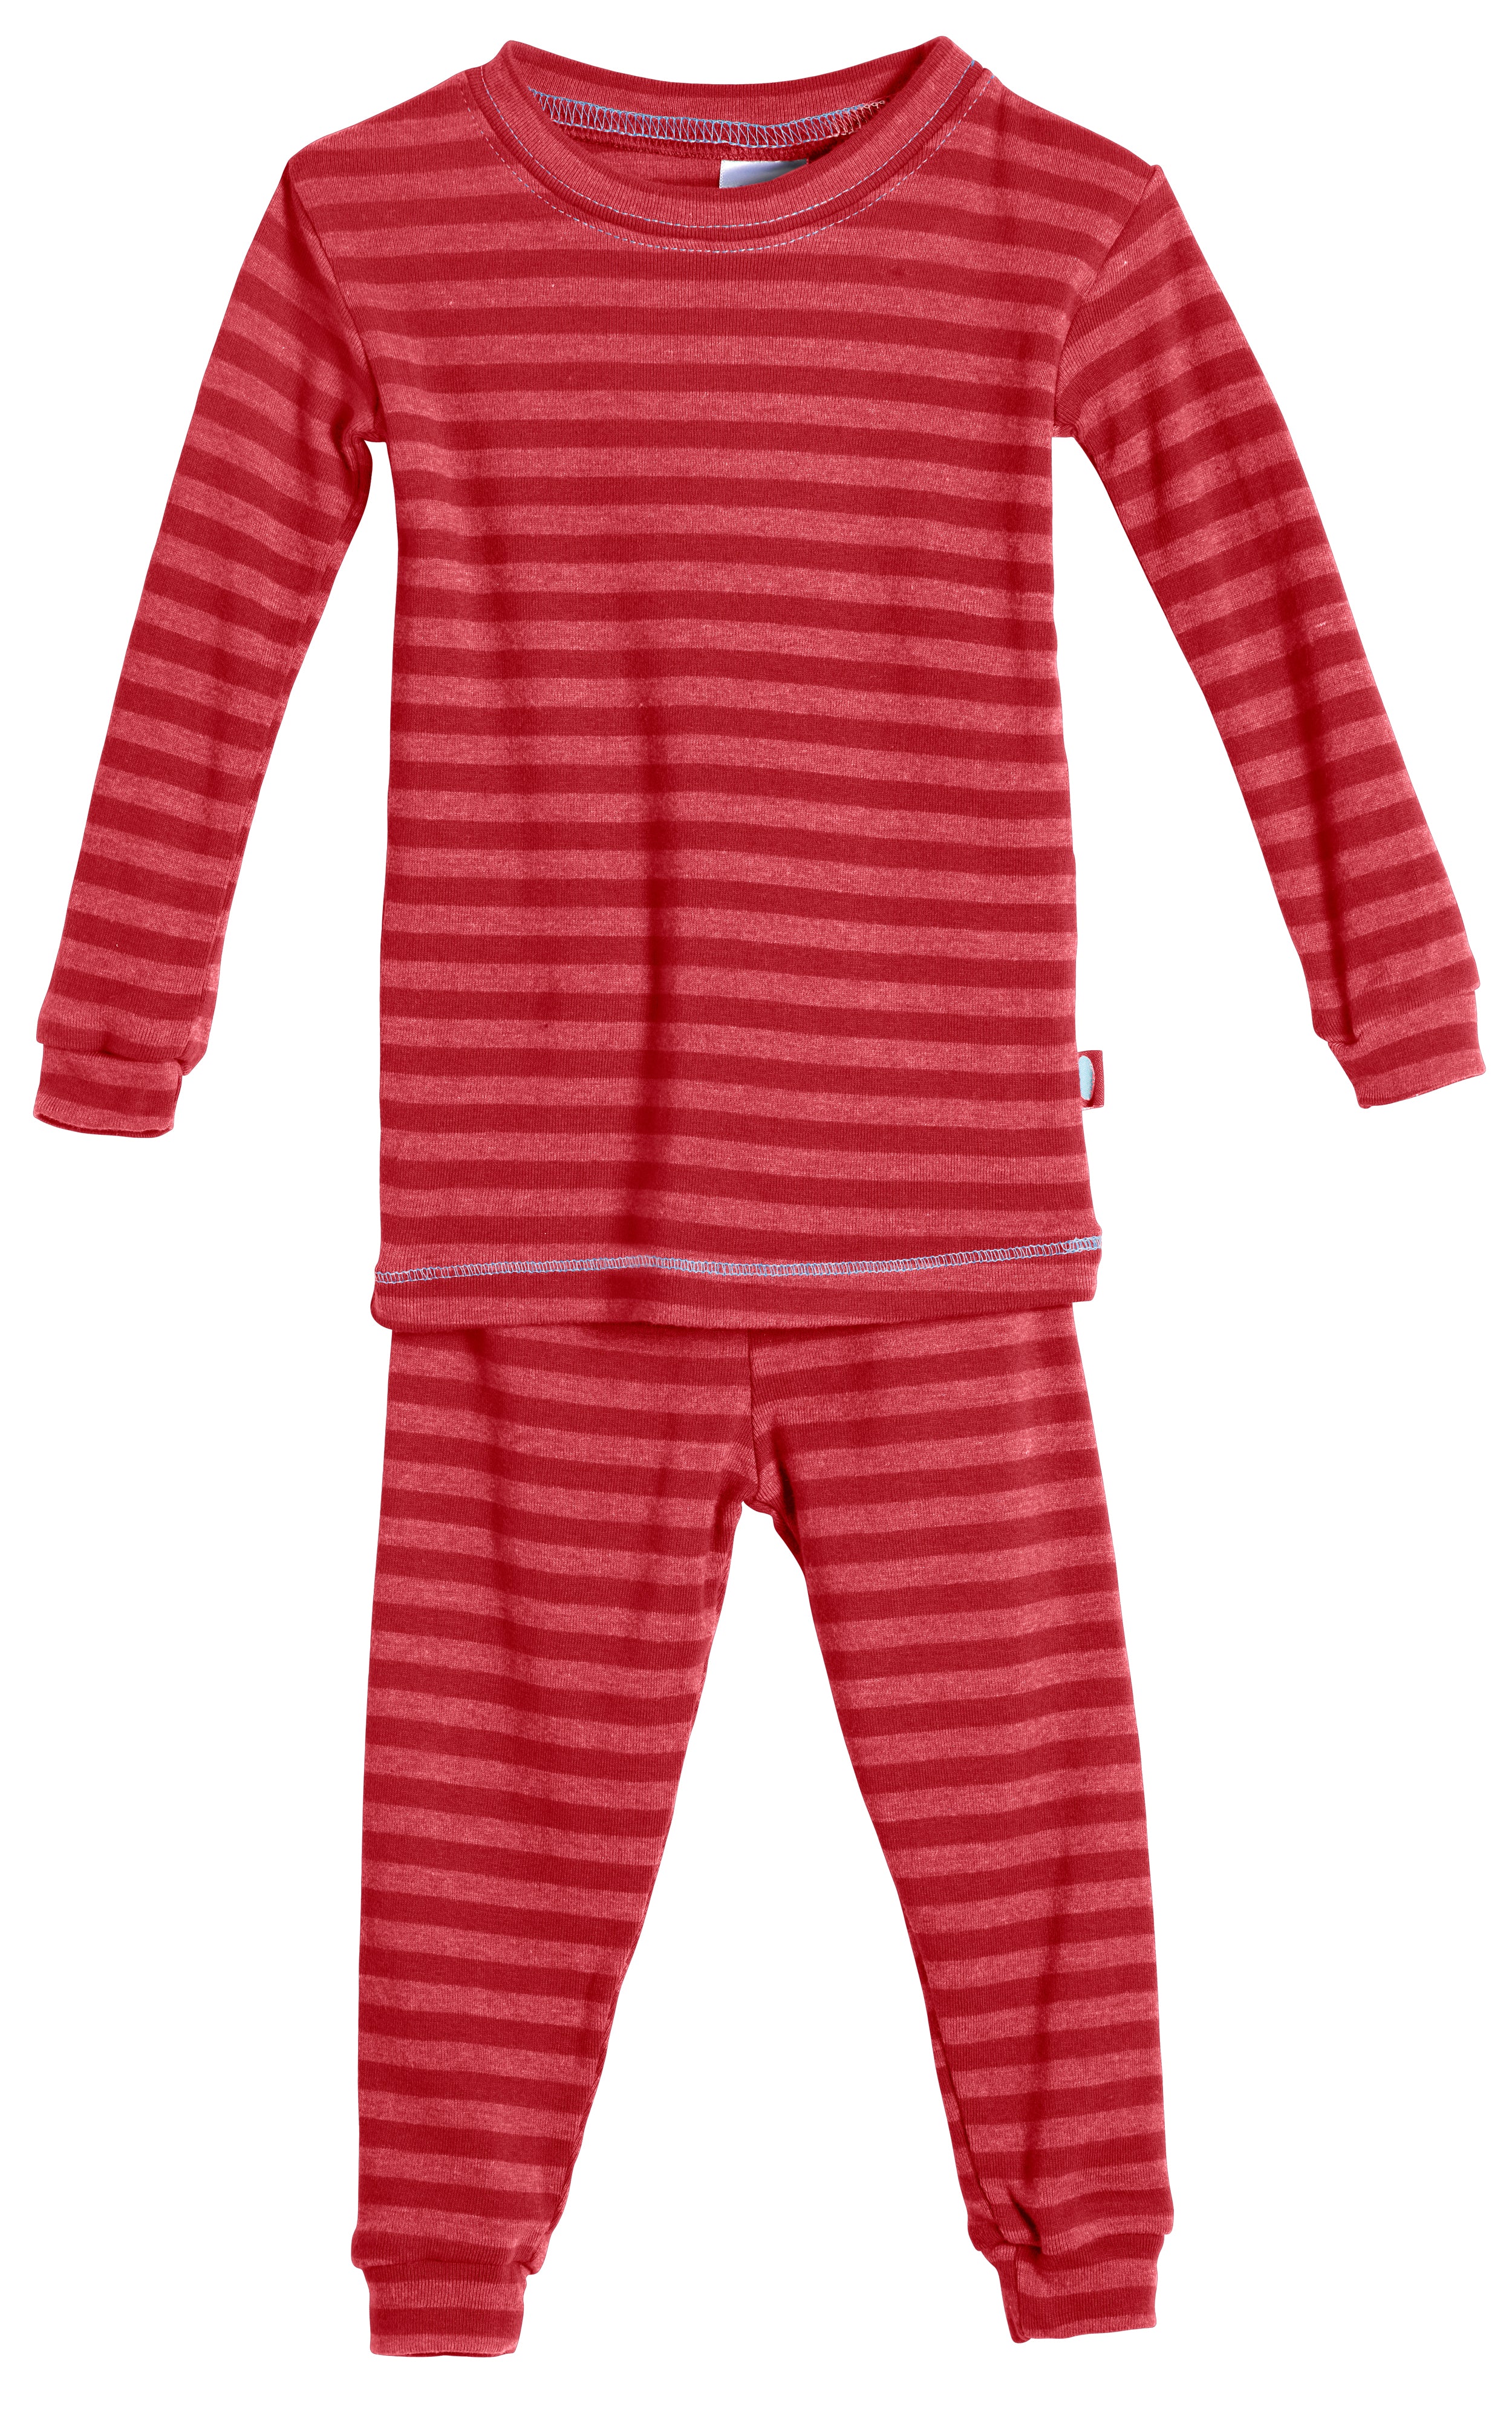 Boys and Girls Striped Matching Pajamas